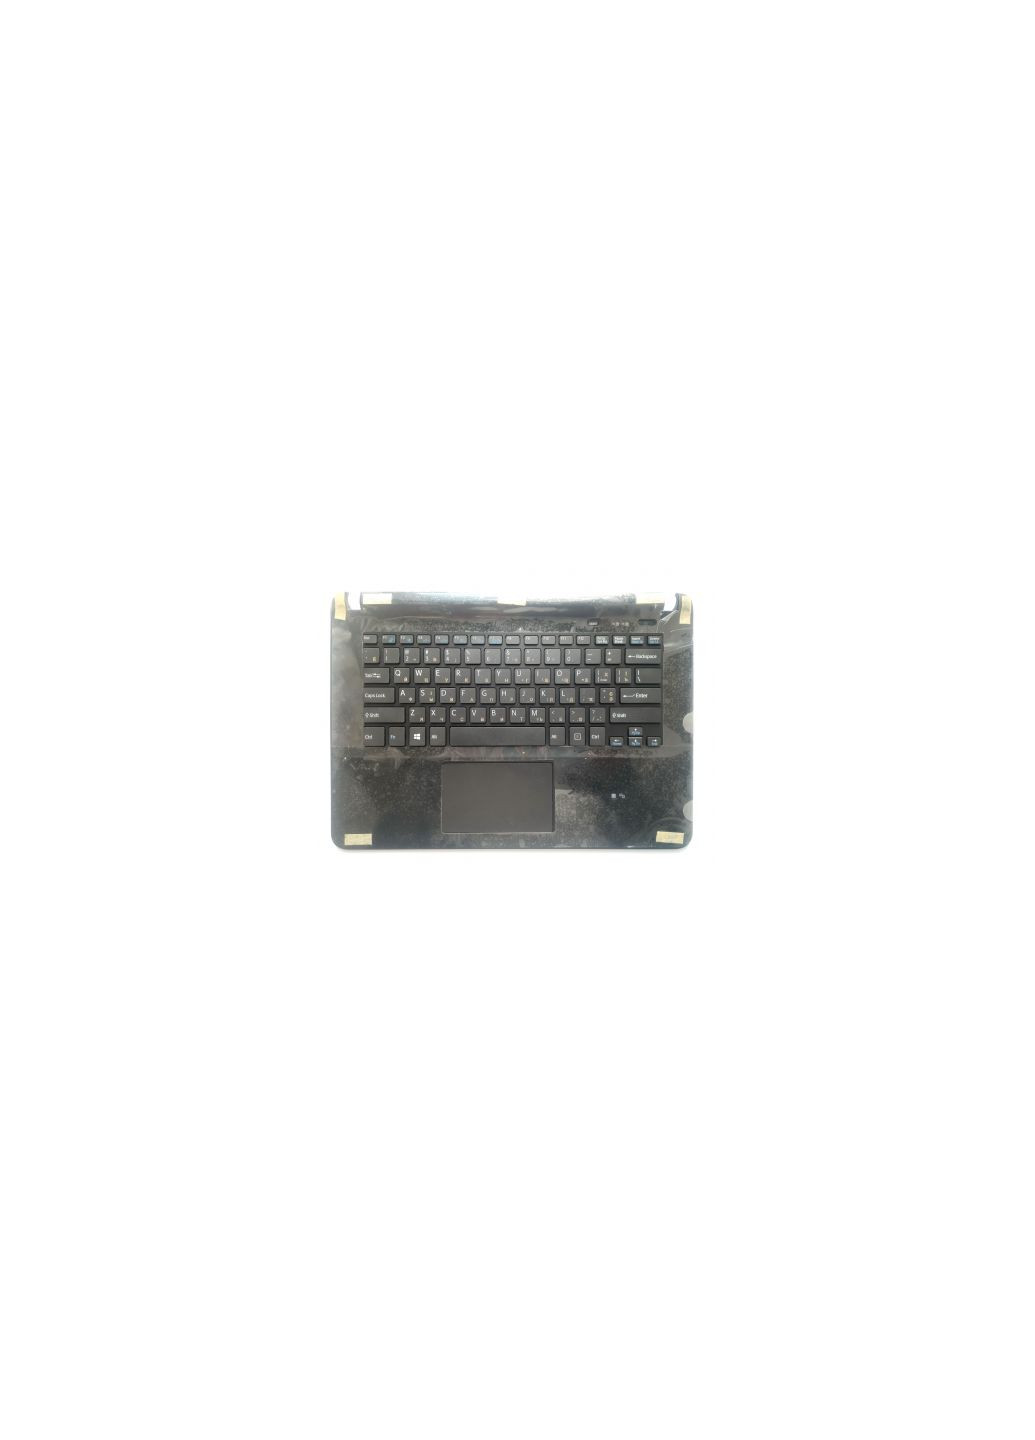 Клавиатура ноутбука Vaio SVF142A,SVF143A (Fit 14) black,UA/US,black,frame,TP (A46013) Sony vaio svf142a, svf143a (fit 14) black, ua/us, black, fr (276706367)